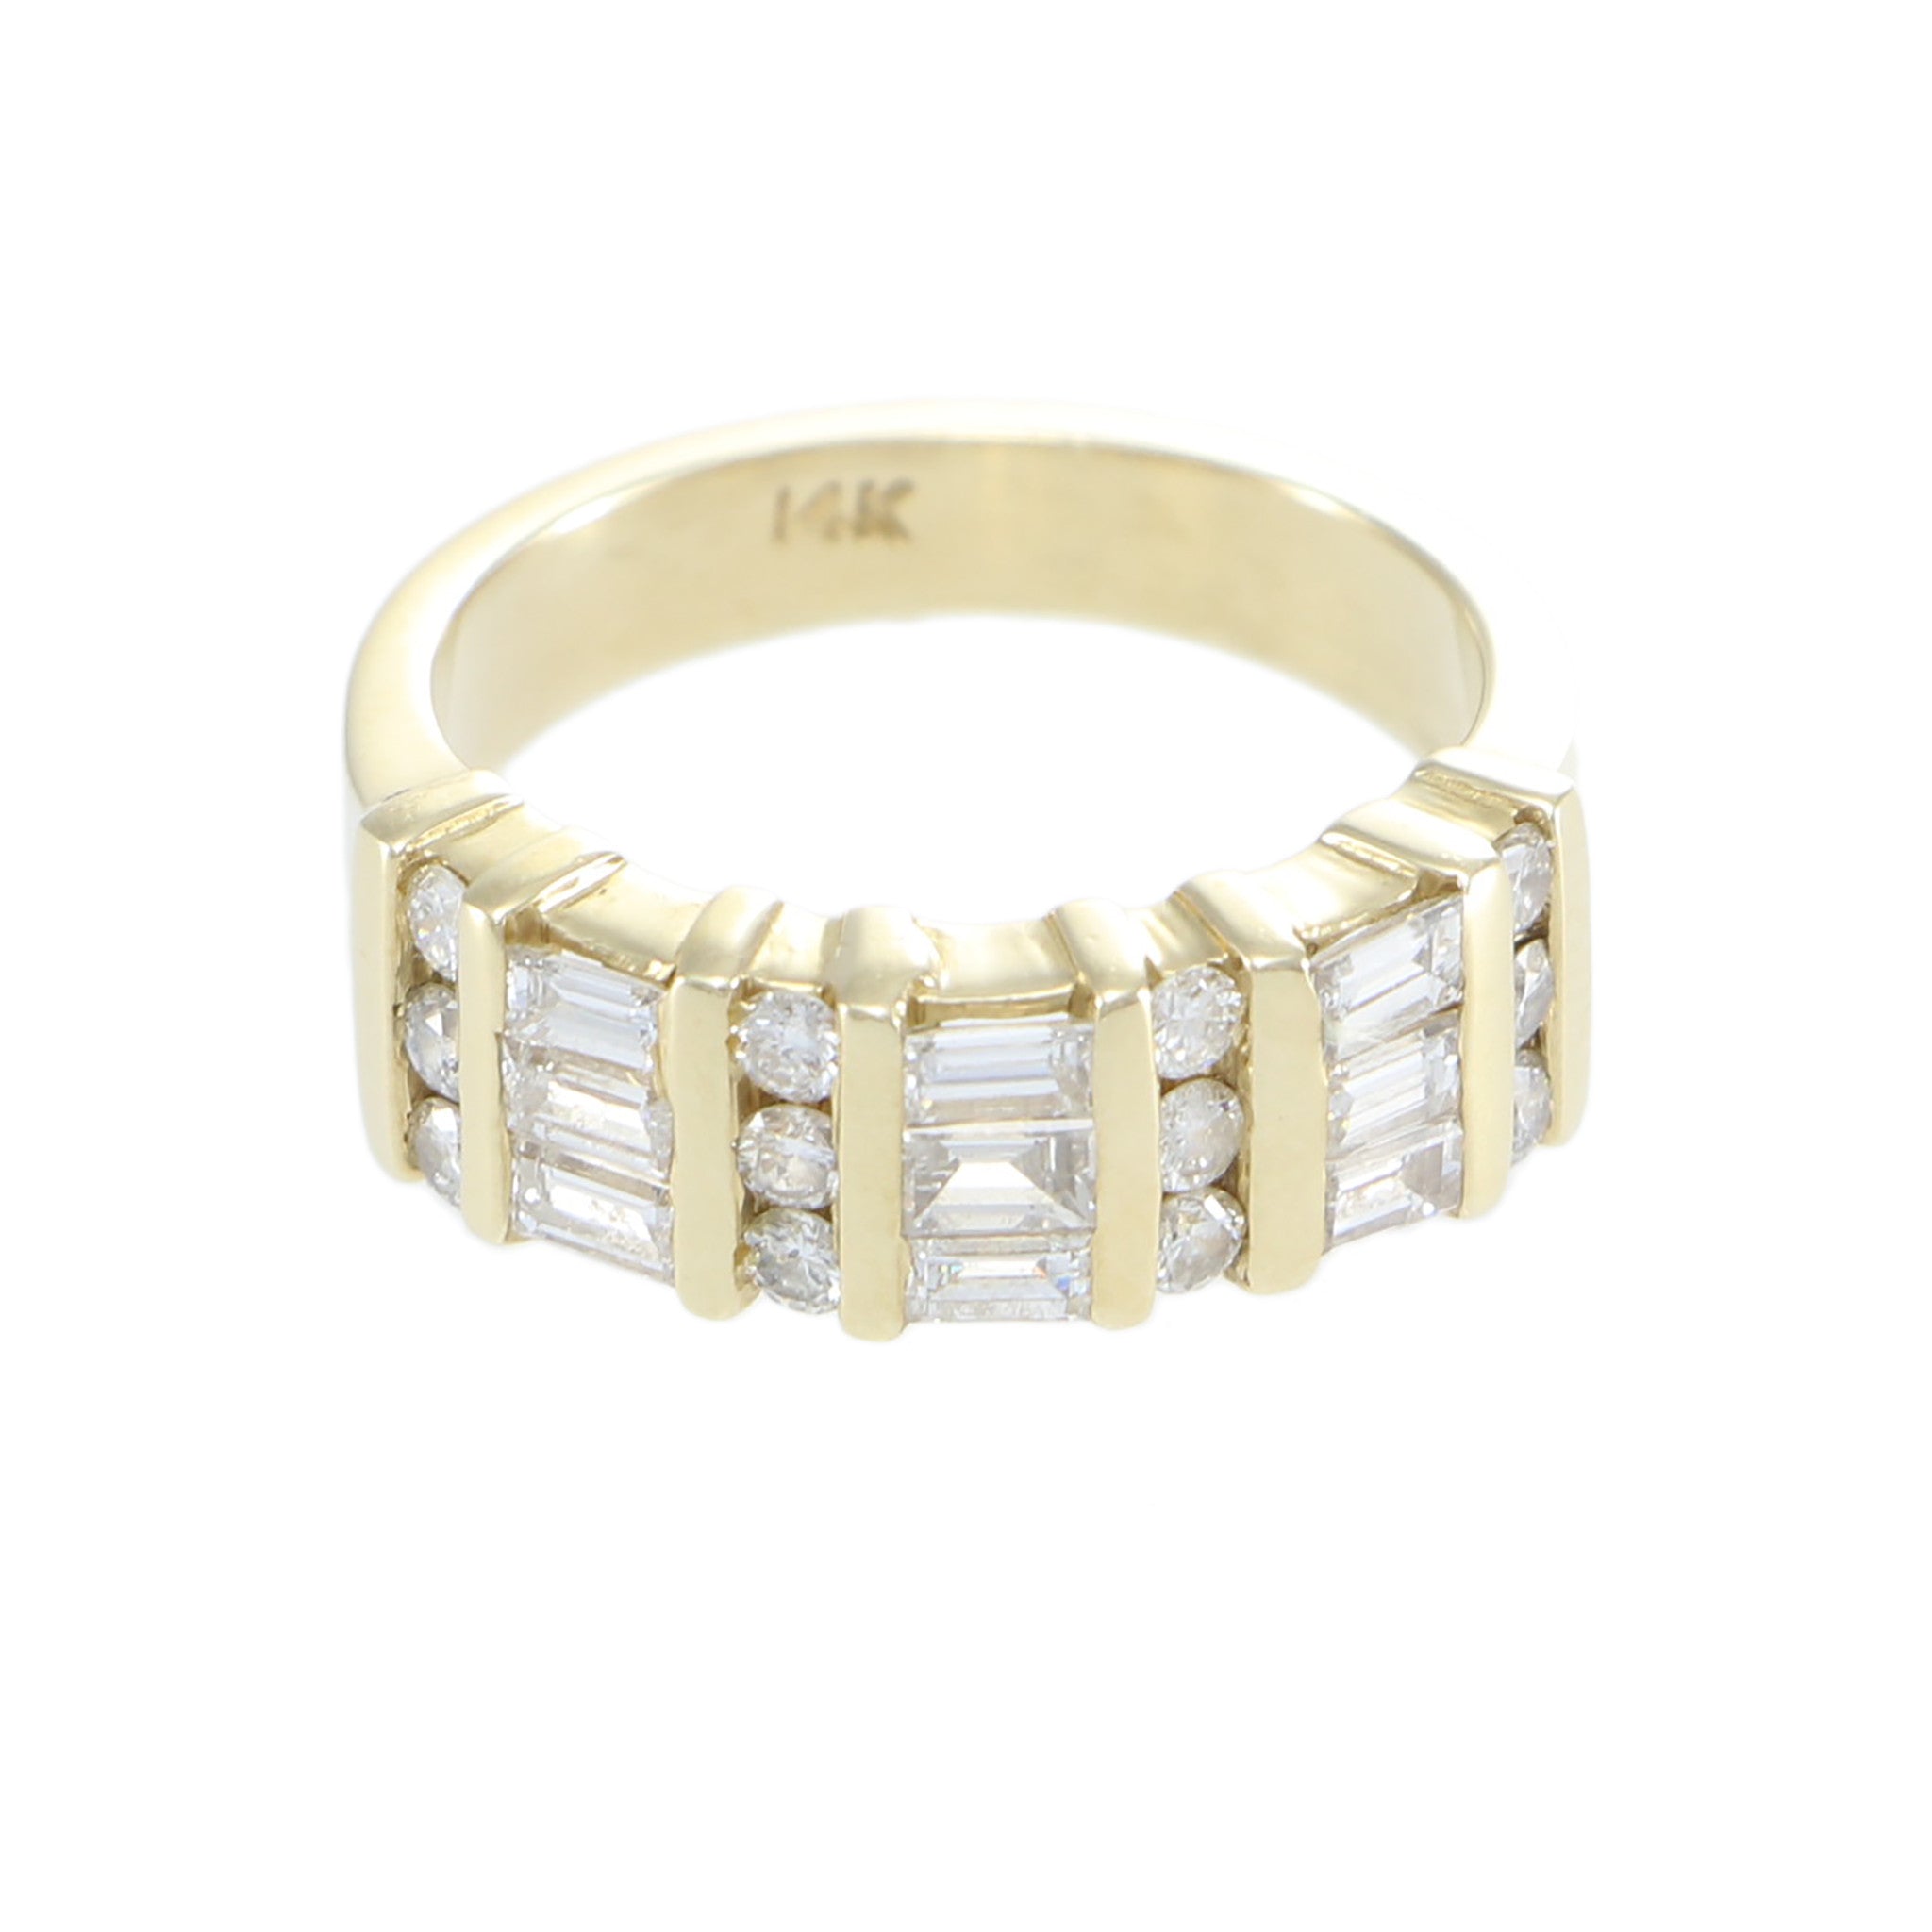 1 Carat Baguette Accented Art Deco Wedding Band in White Gold over Ste —  kisnagems.co.uk